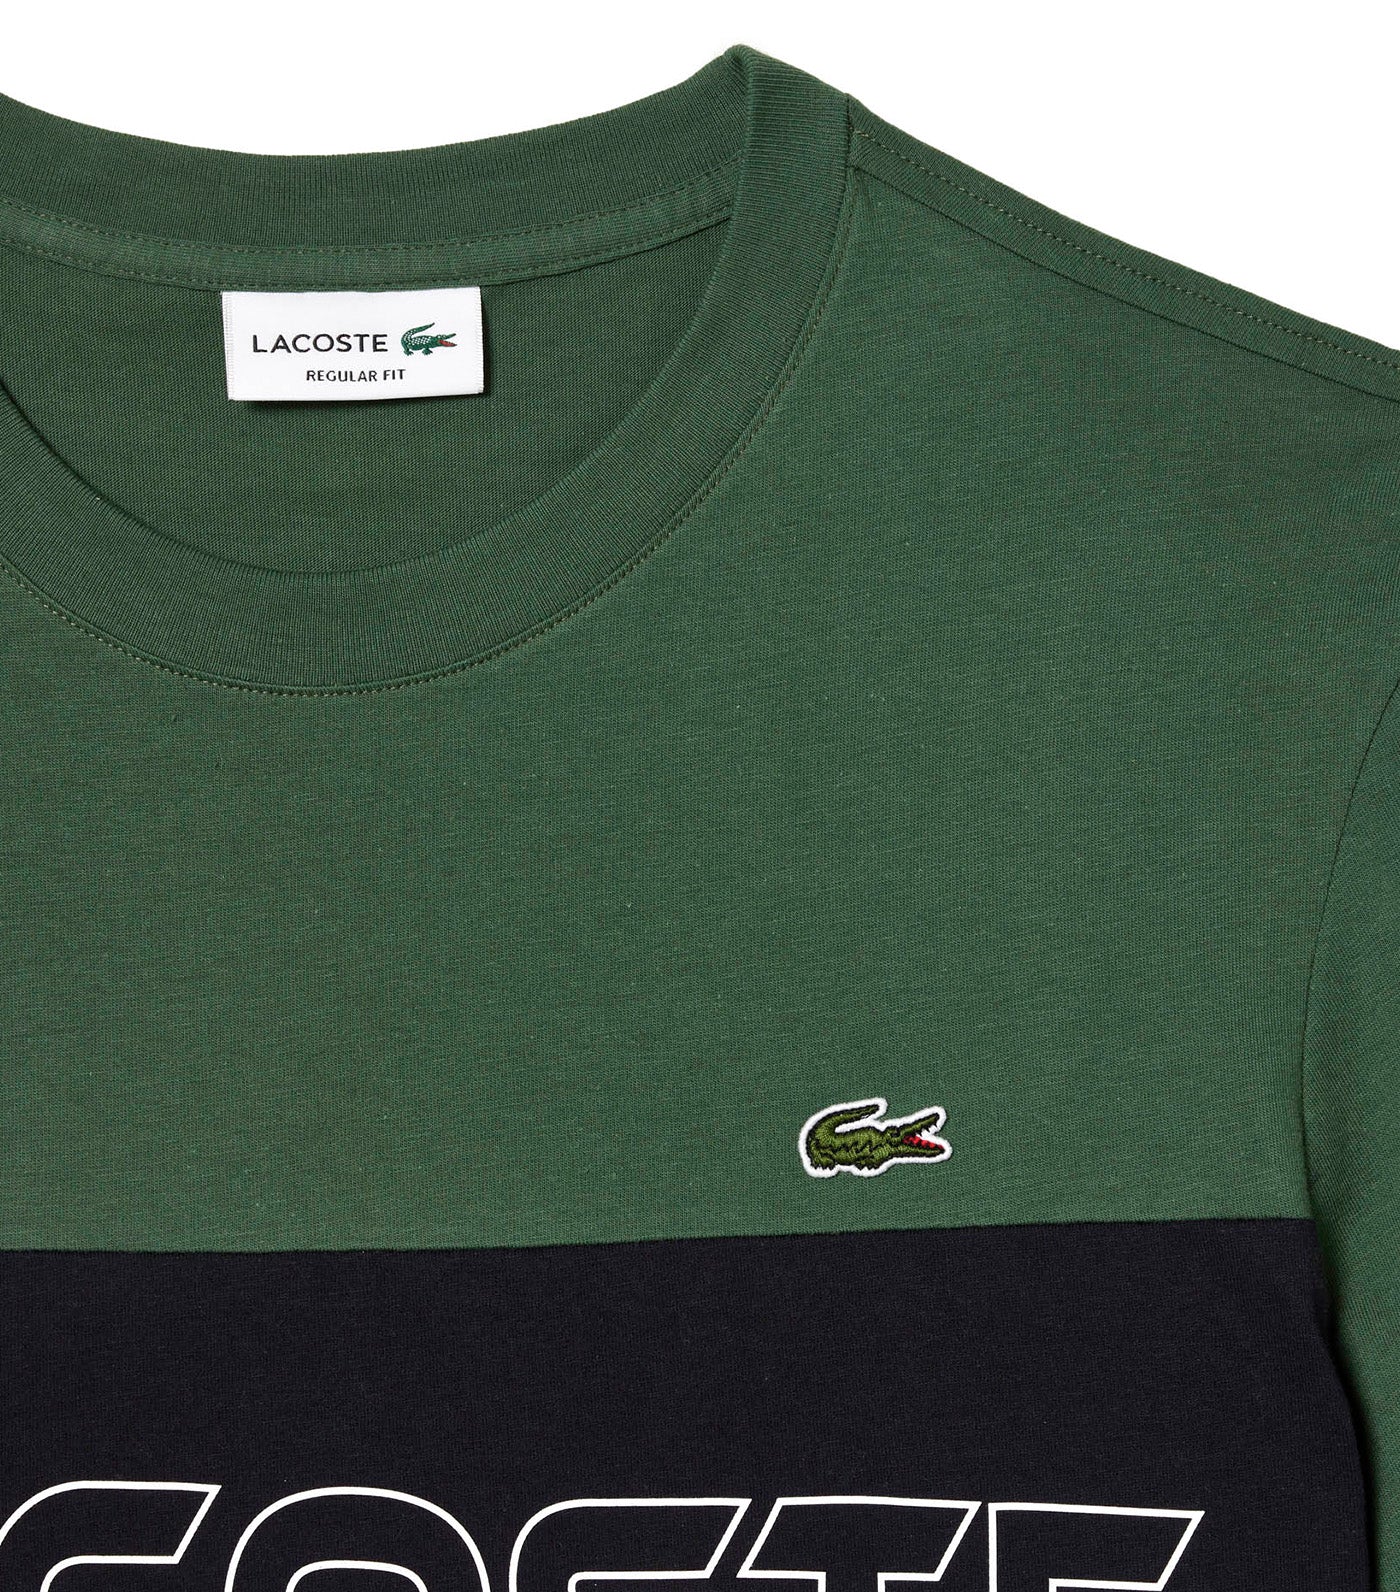 Lacoste Fit Regular T-Shirt Sequoia/Abysm Printed Colourblock Lacoste